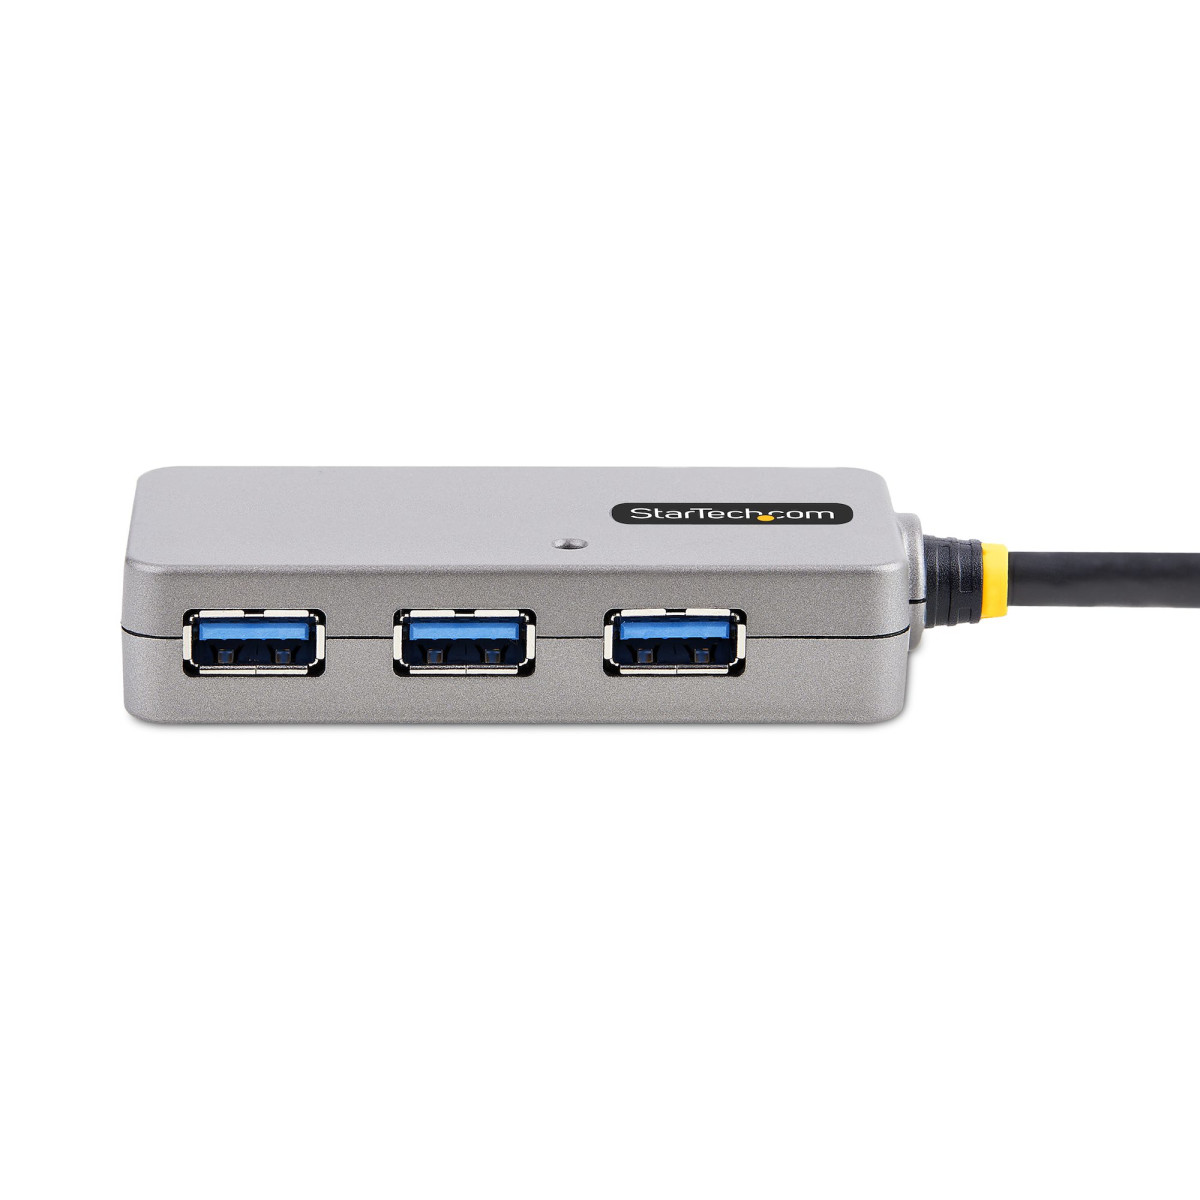 USB Extender Hub 10m 4-Port USB 3.0 Hub